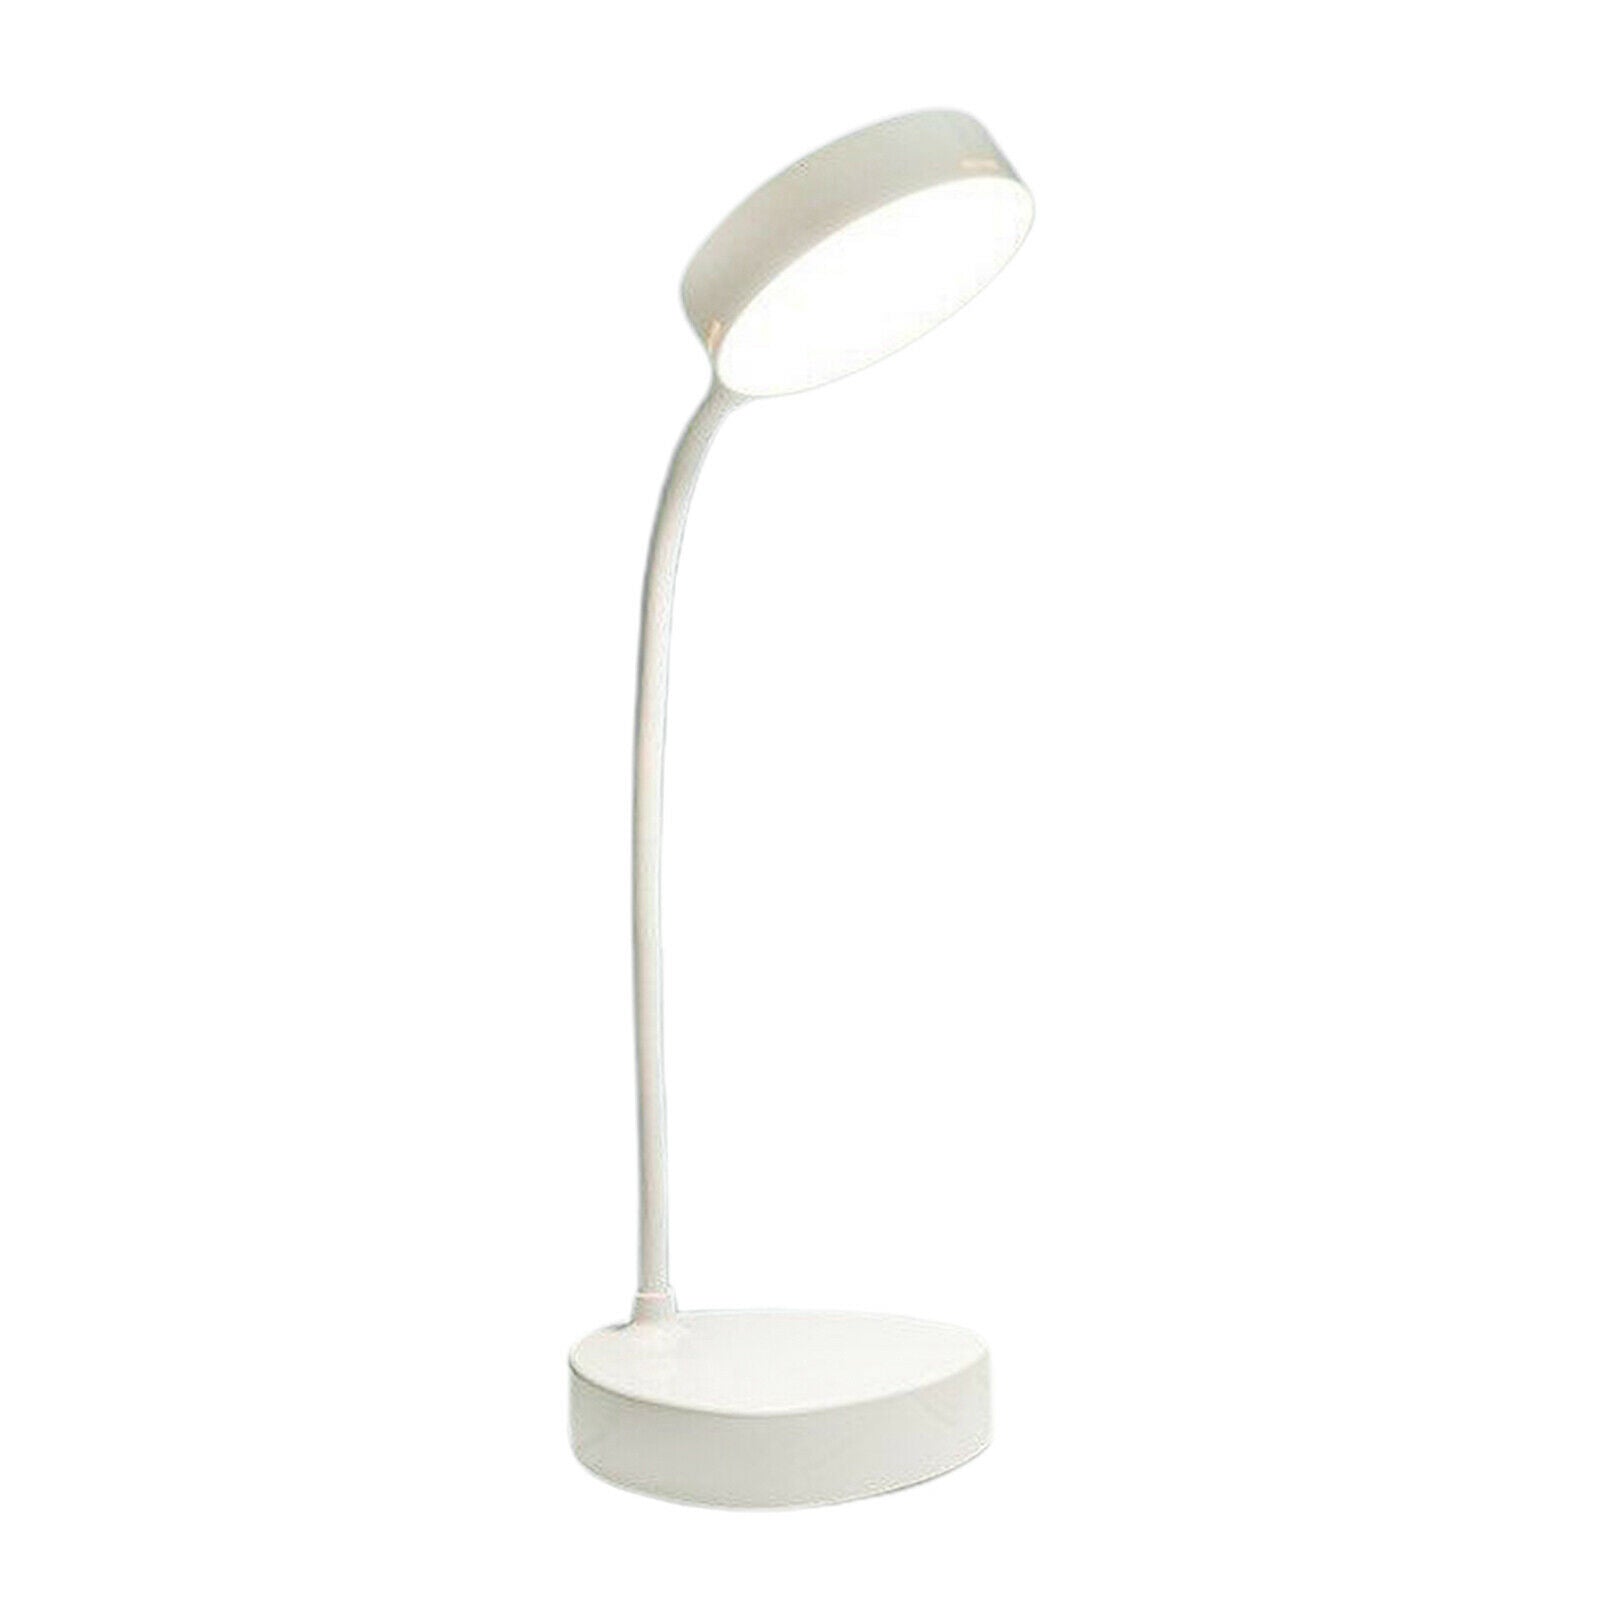 Bedside LED Desk Reading Lamp Tabletop Light Dimmable Flexible for Home Office